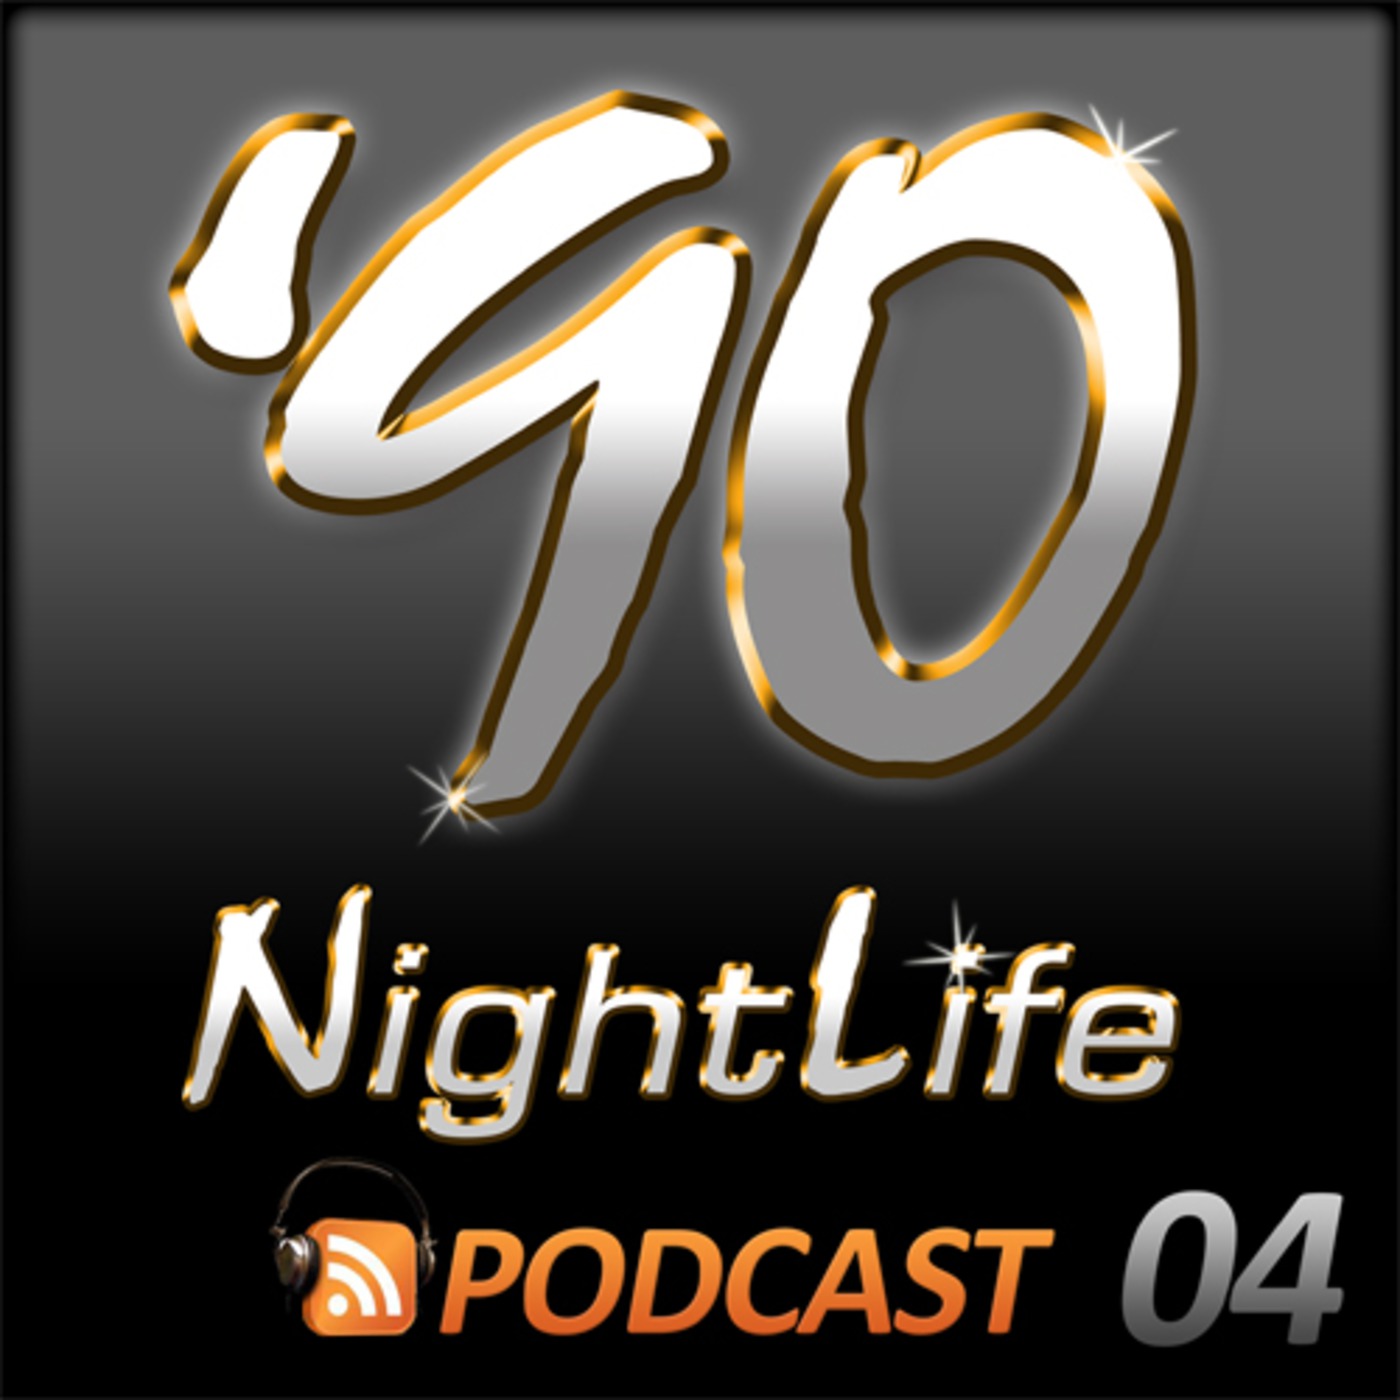 '90 NightLife - Podcast 04